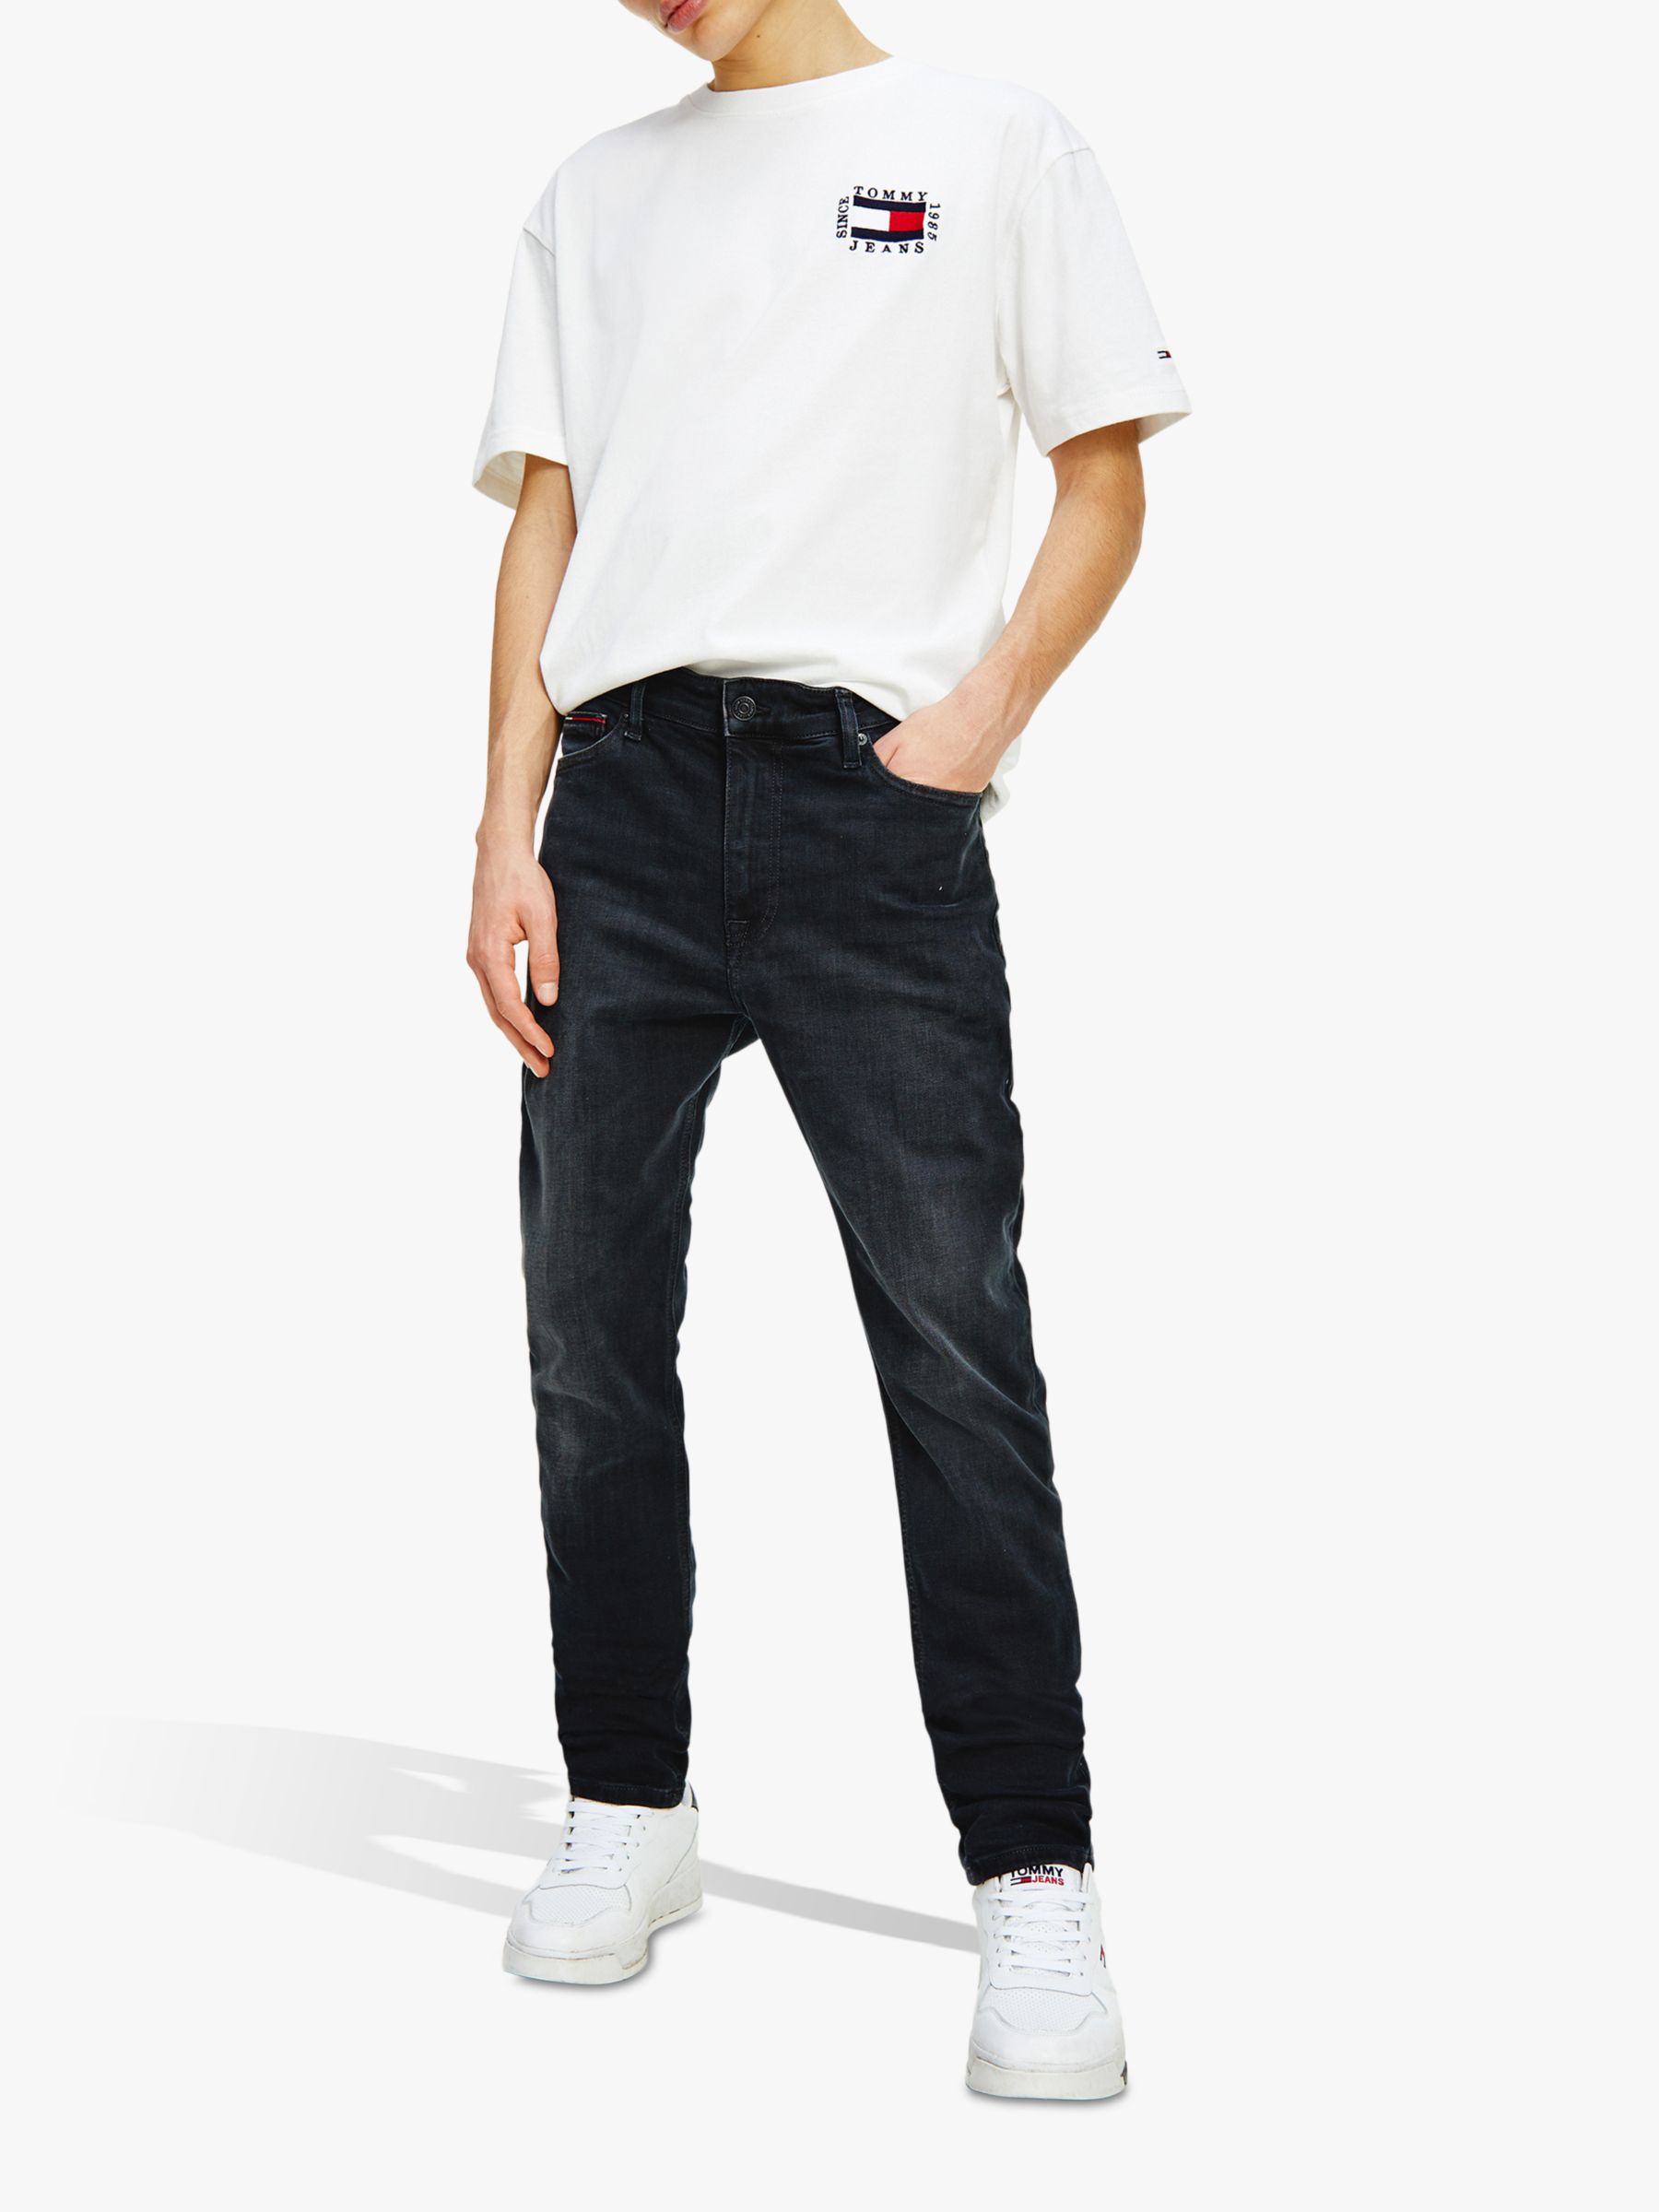 Hilfiger Denim Jacob Skinny Fit Jeans, Dynamic Black, 34S